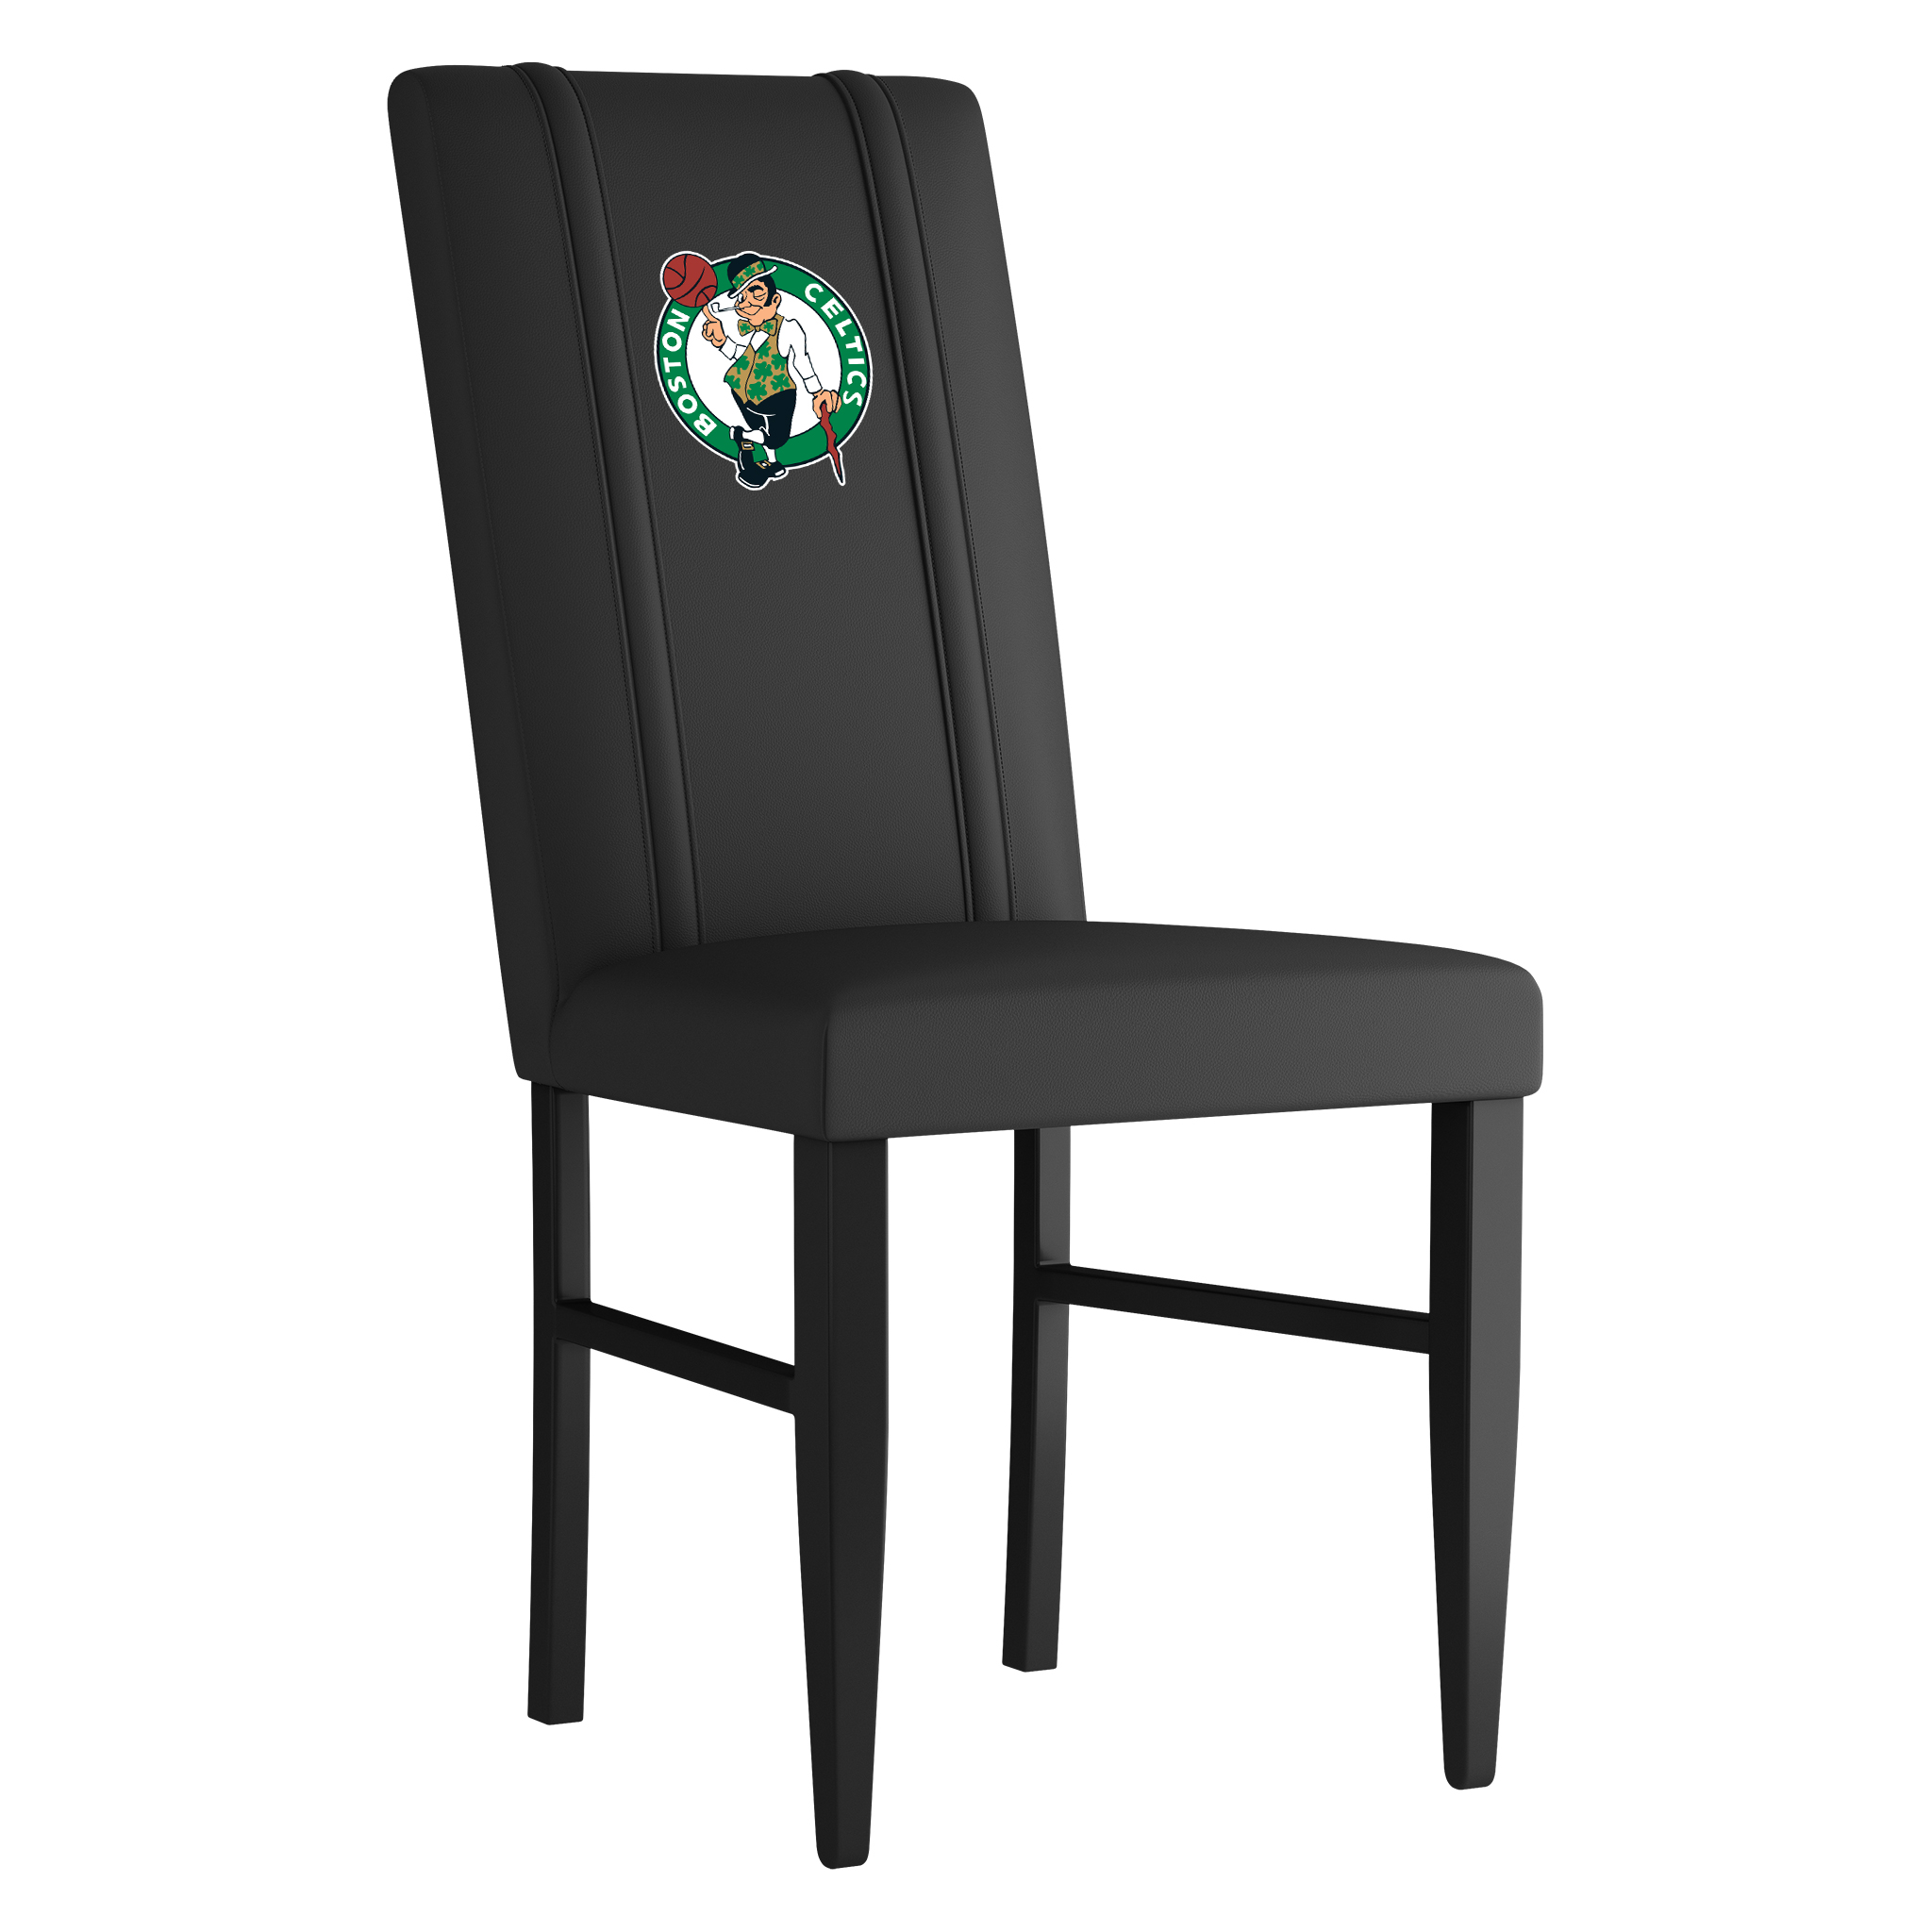 Boston Celtics Side Chair 2000 With Boston Celtics Logo